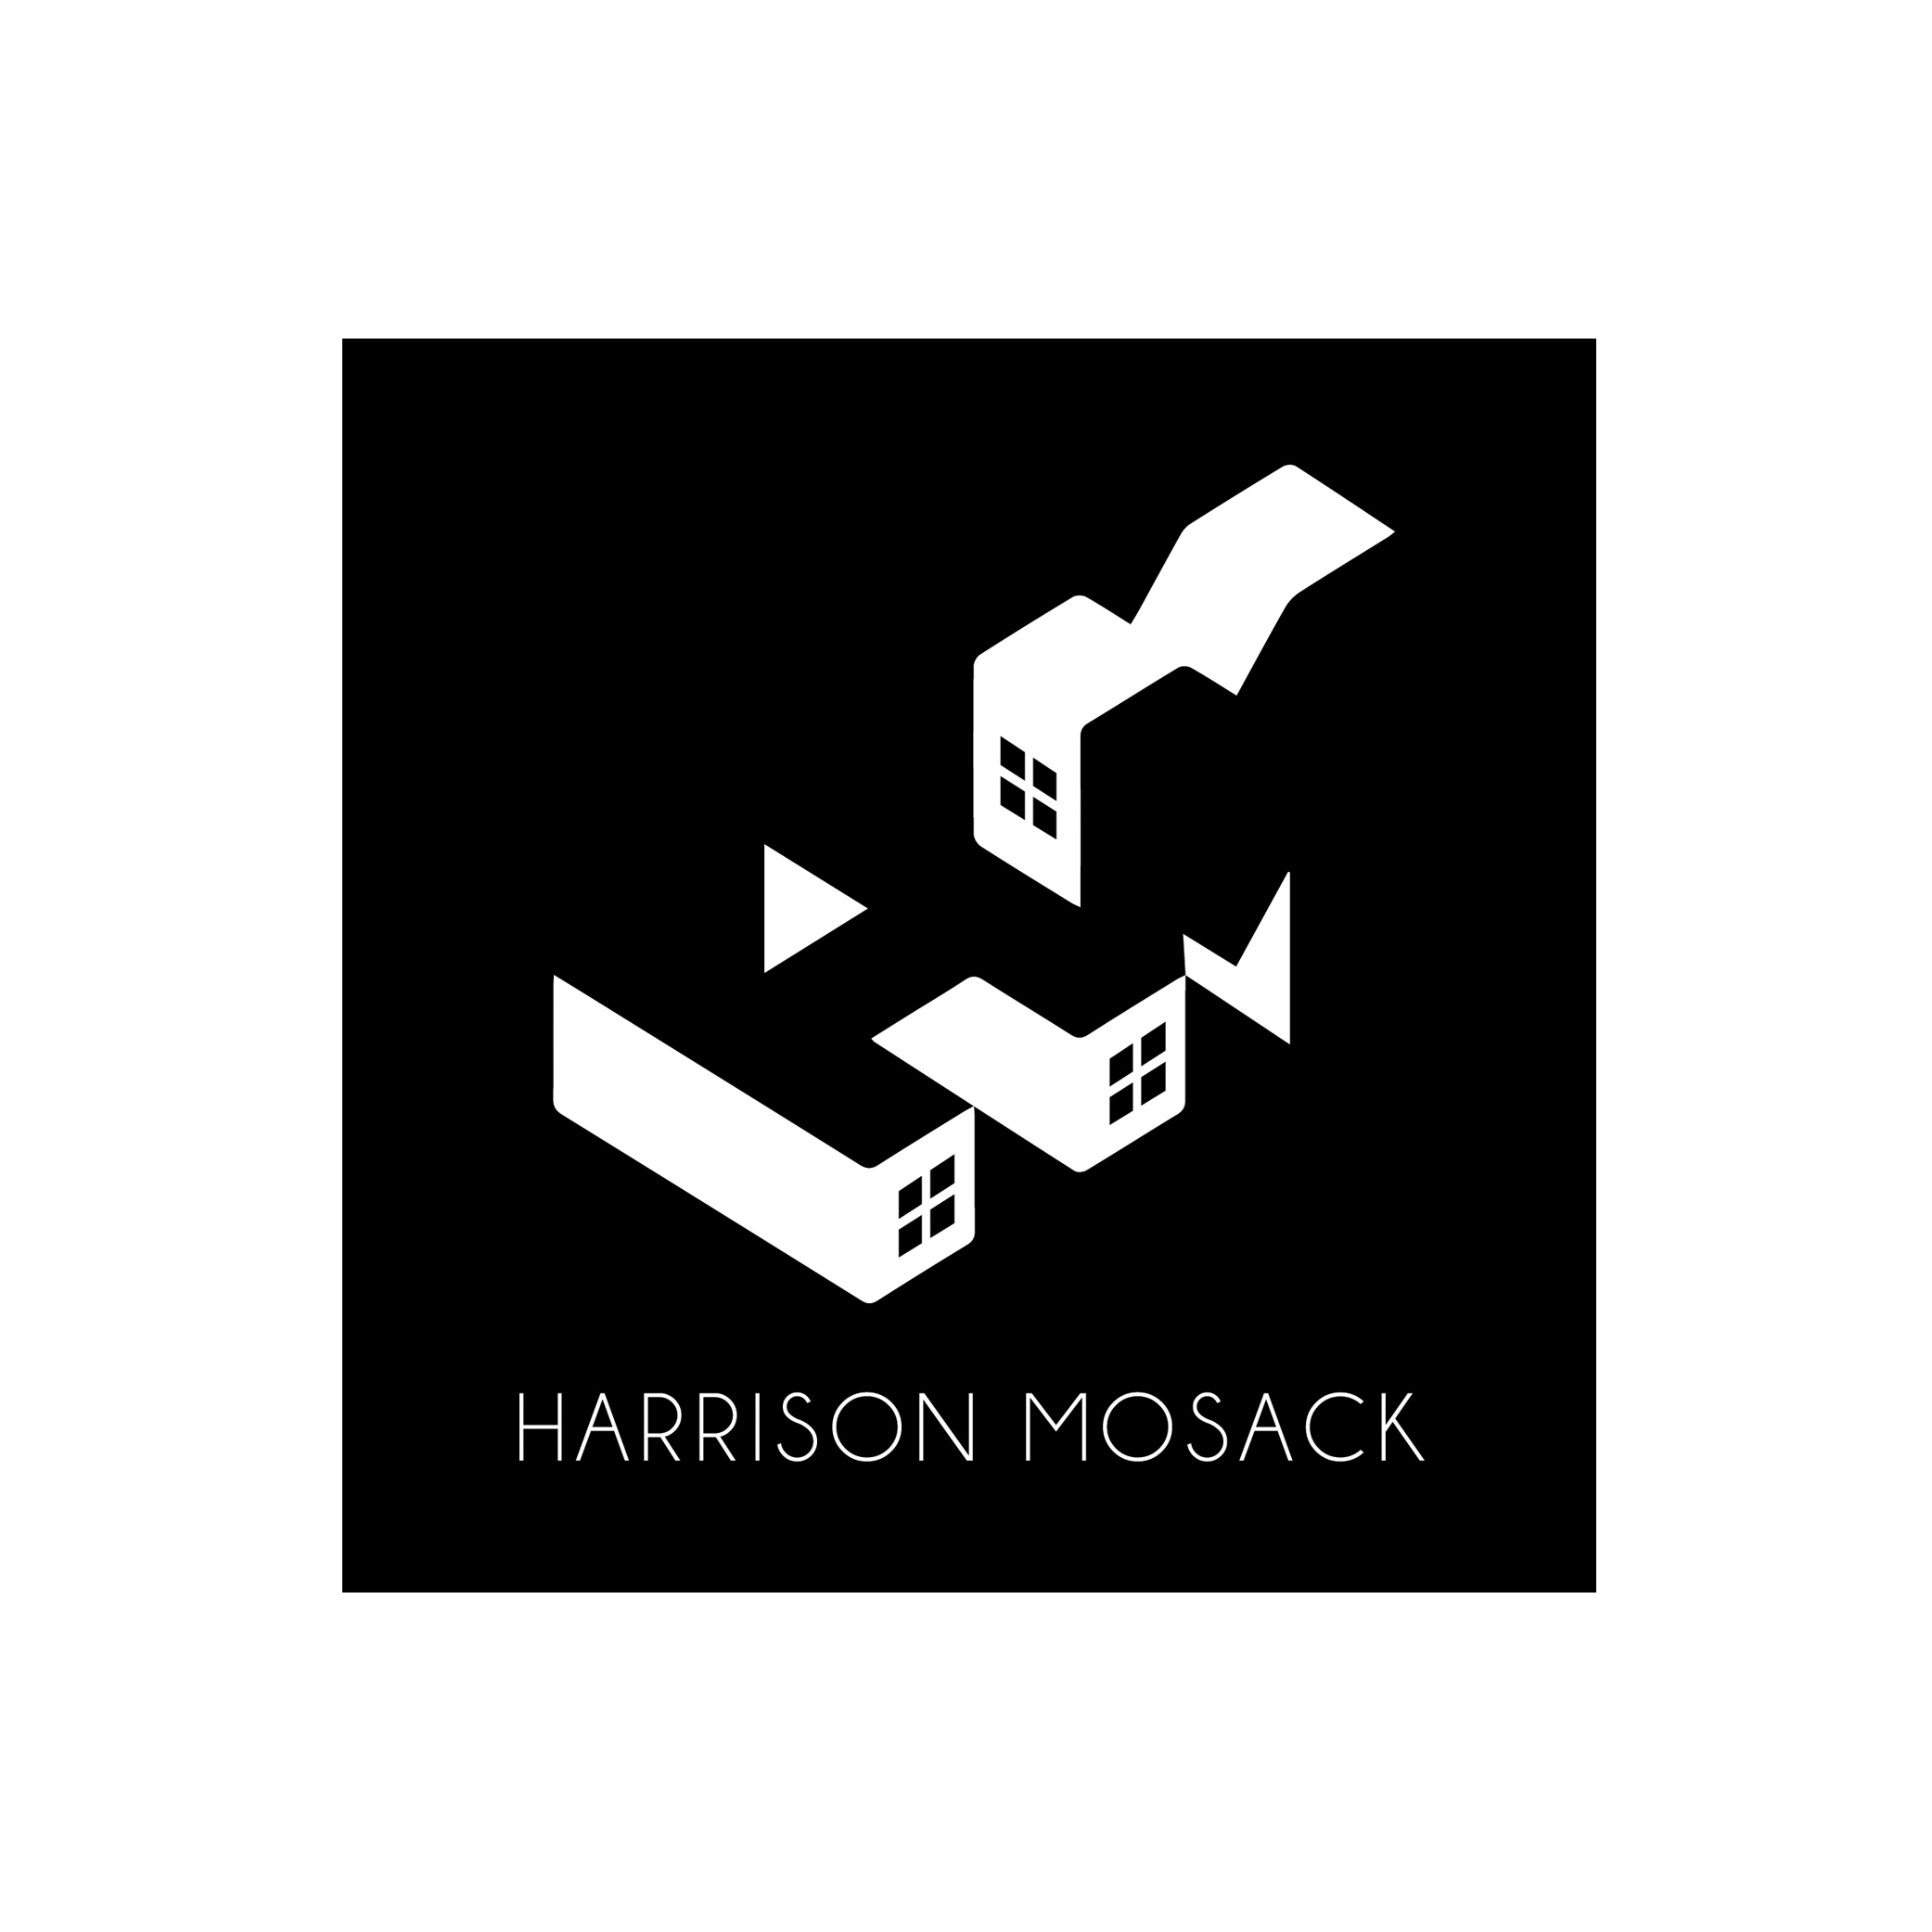 Harrison Mosack